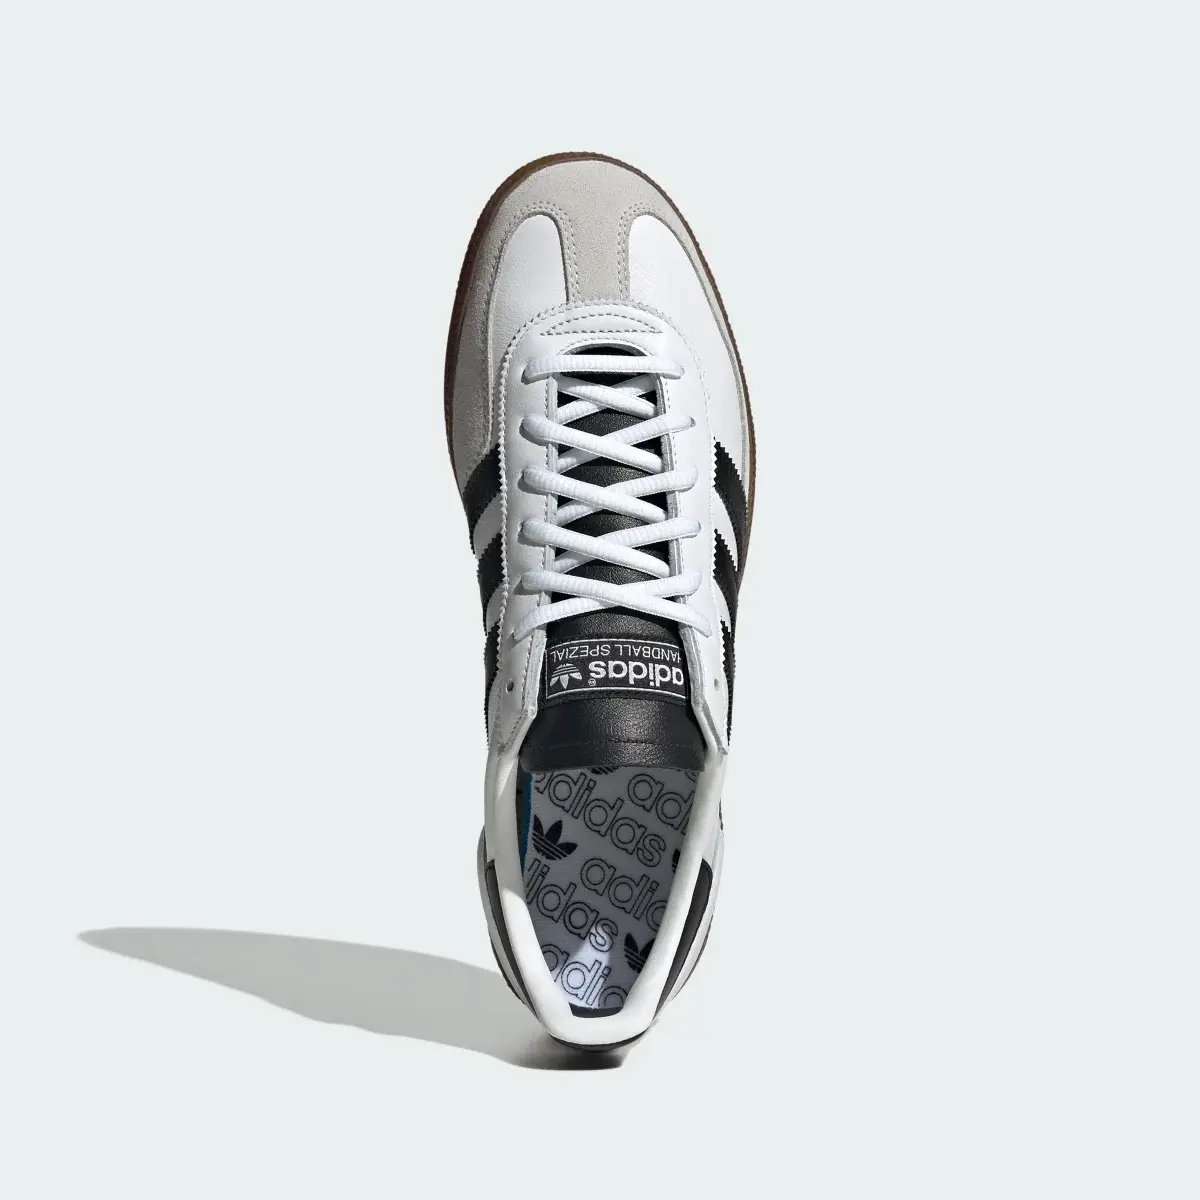 Adidas Handball Spezial Shoes. 3